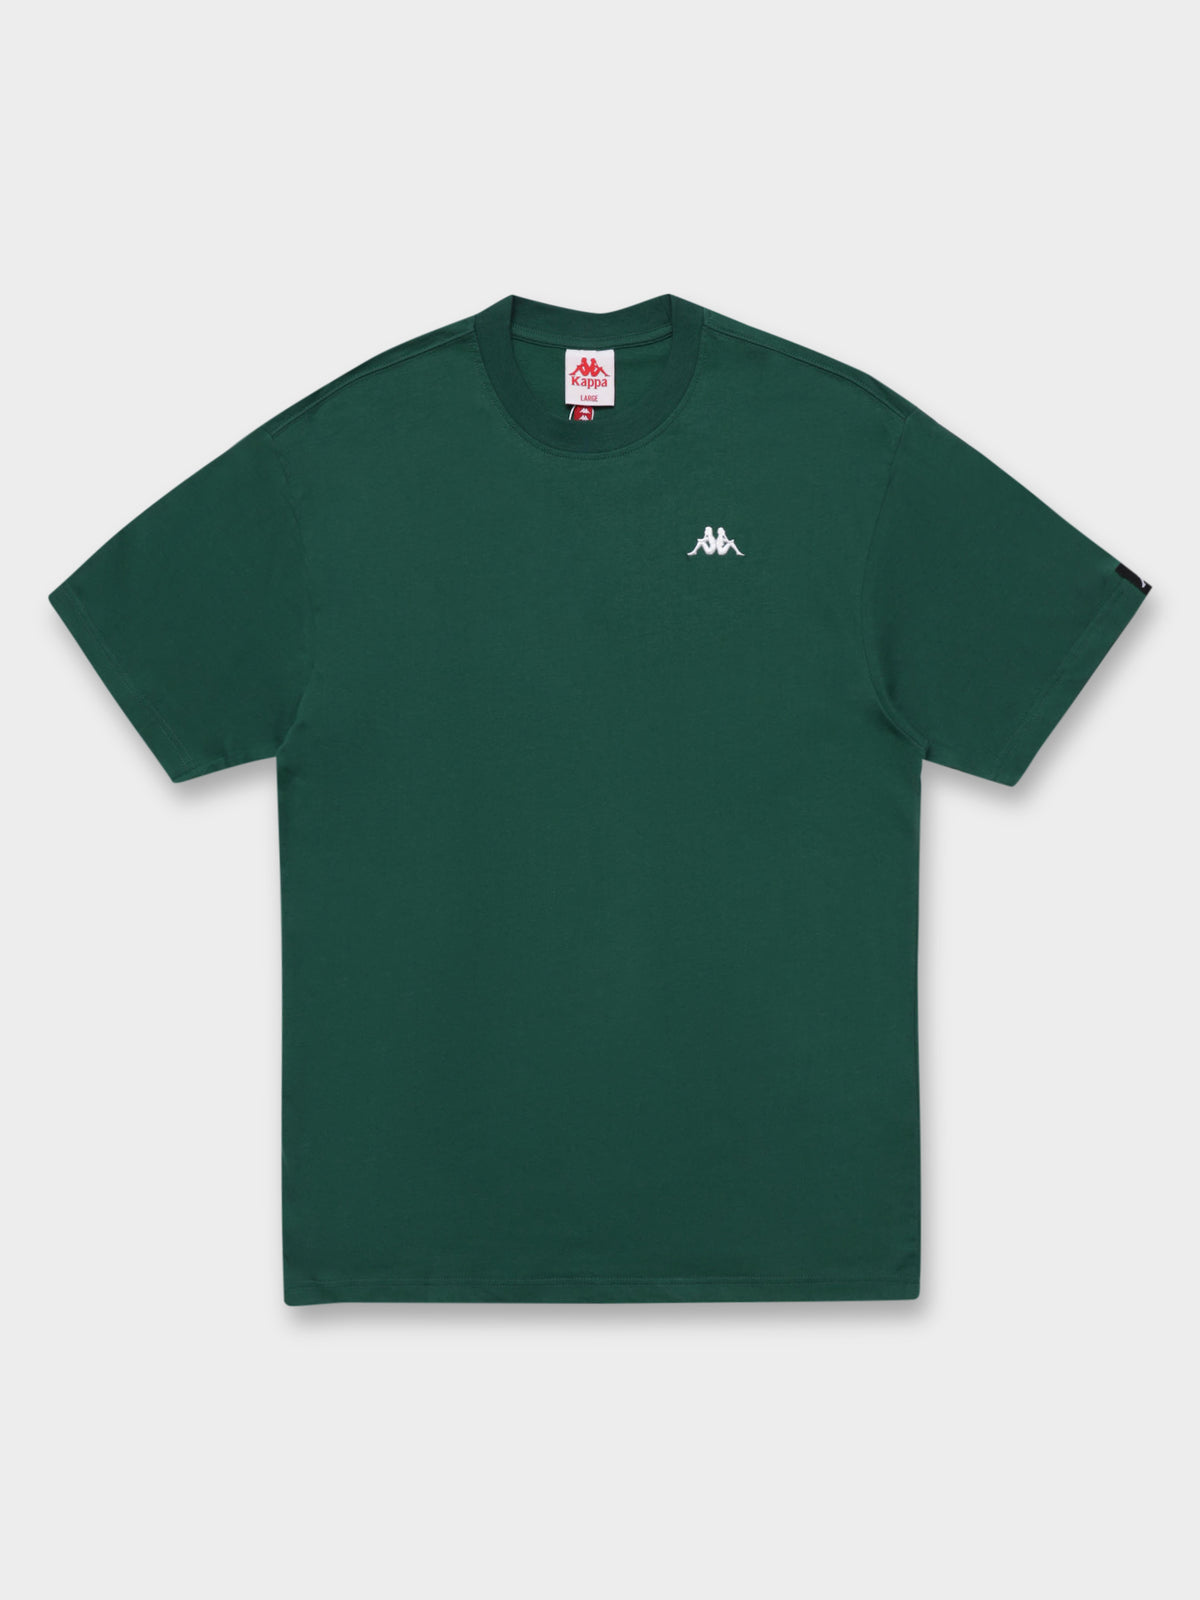 Authentic Senoc T-Shirt in Green Posy